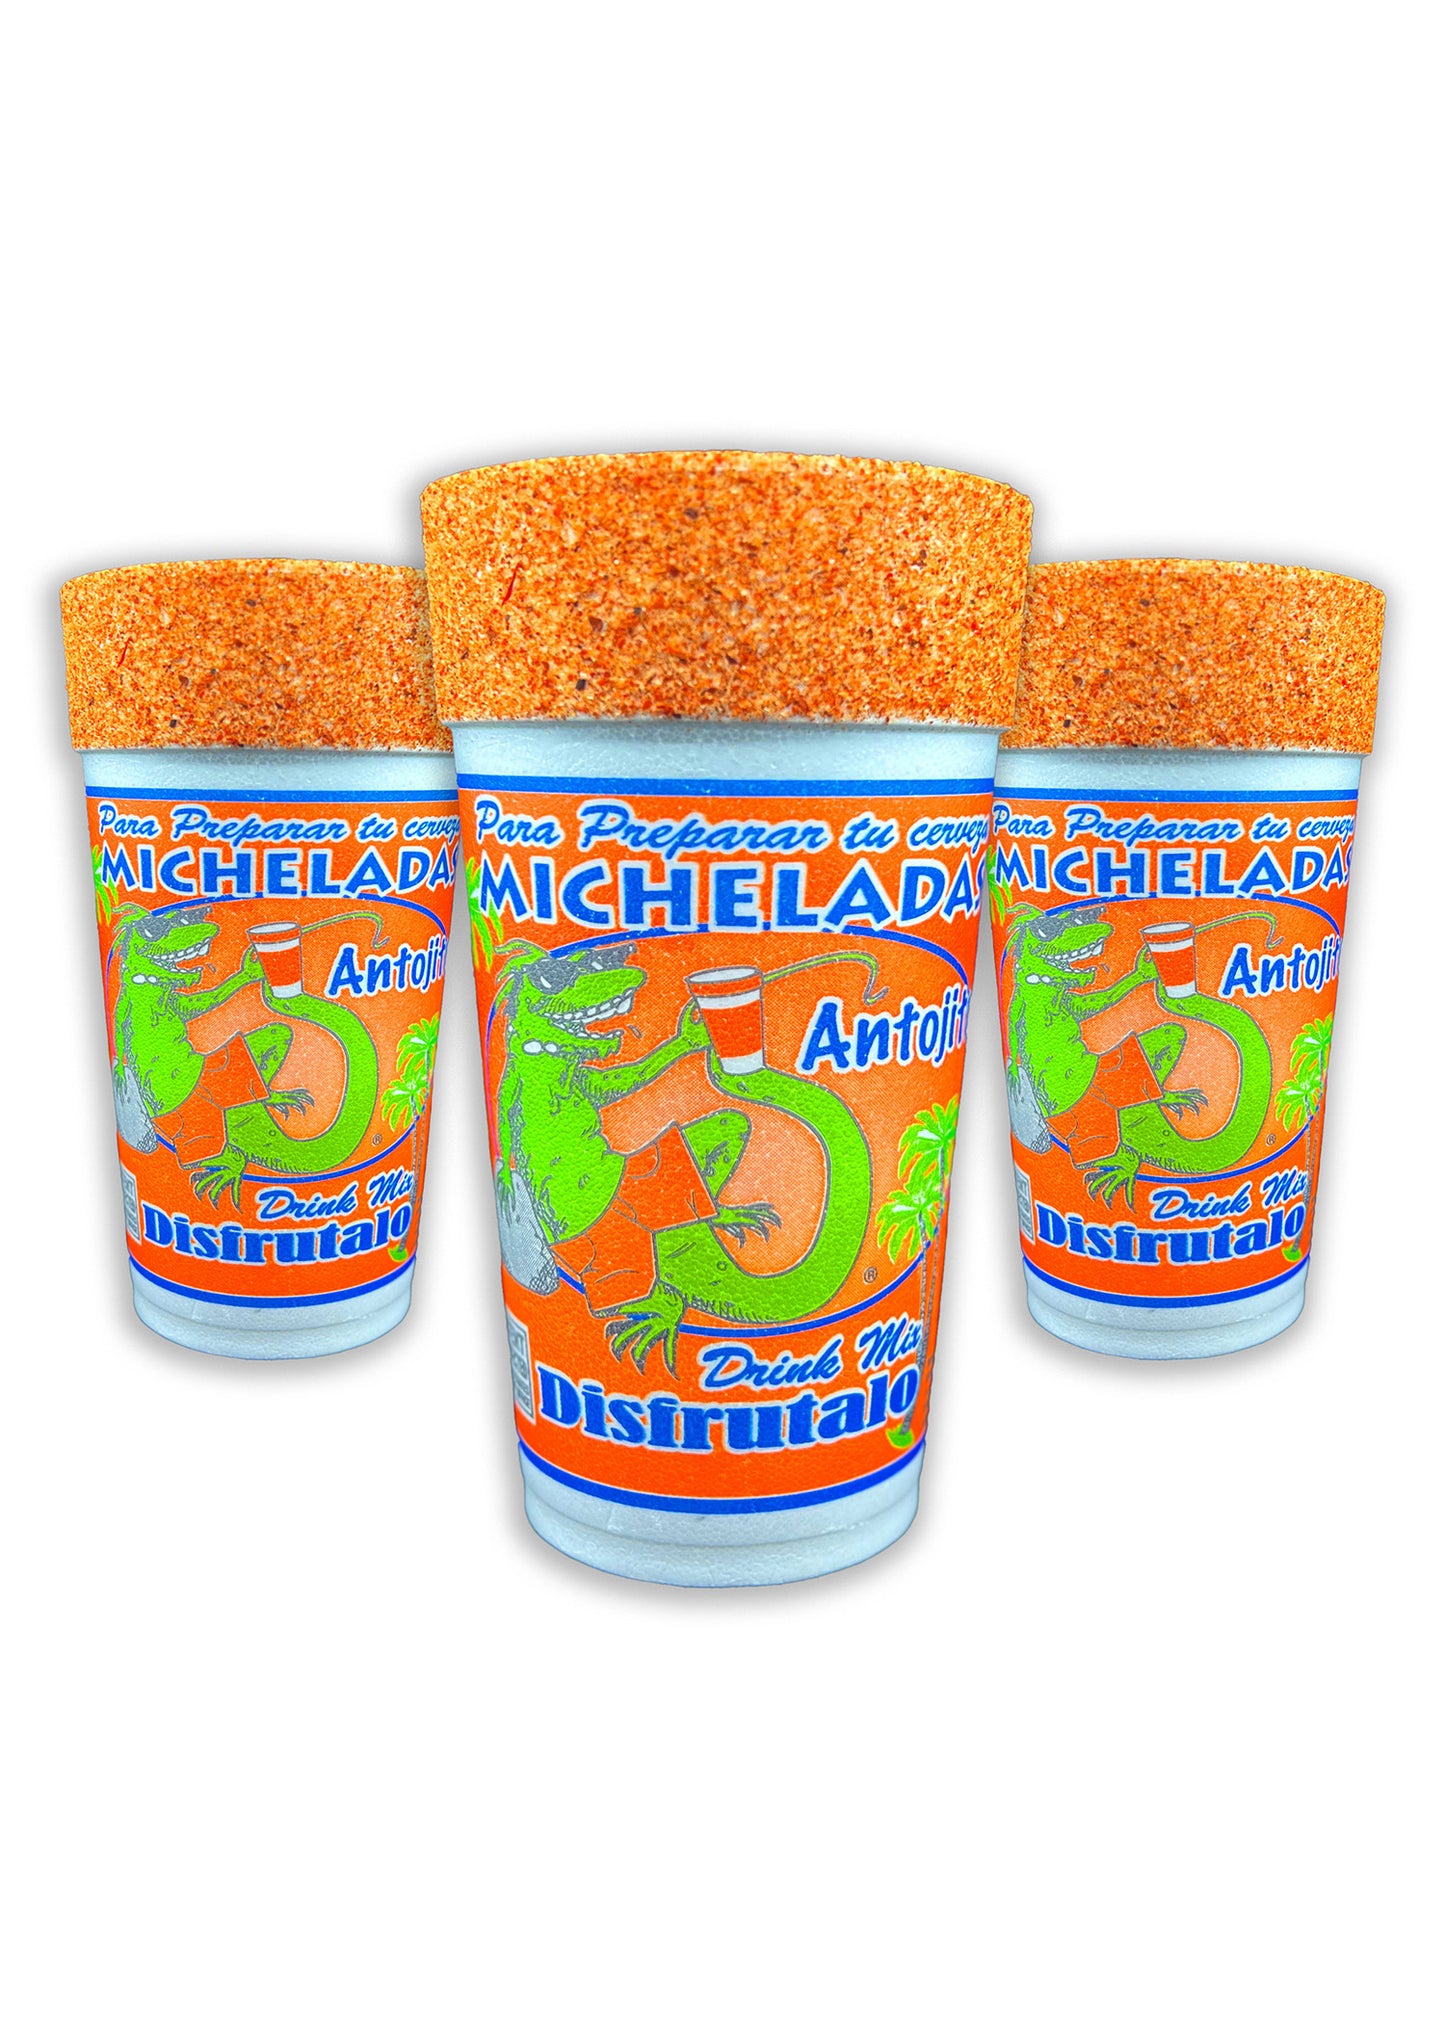 Original Michelada Cup - Antojitos (12 pack) – Micheladas